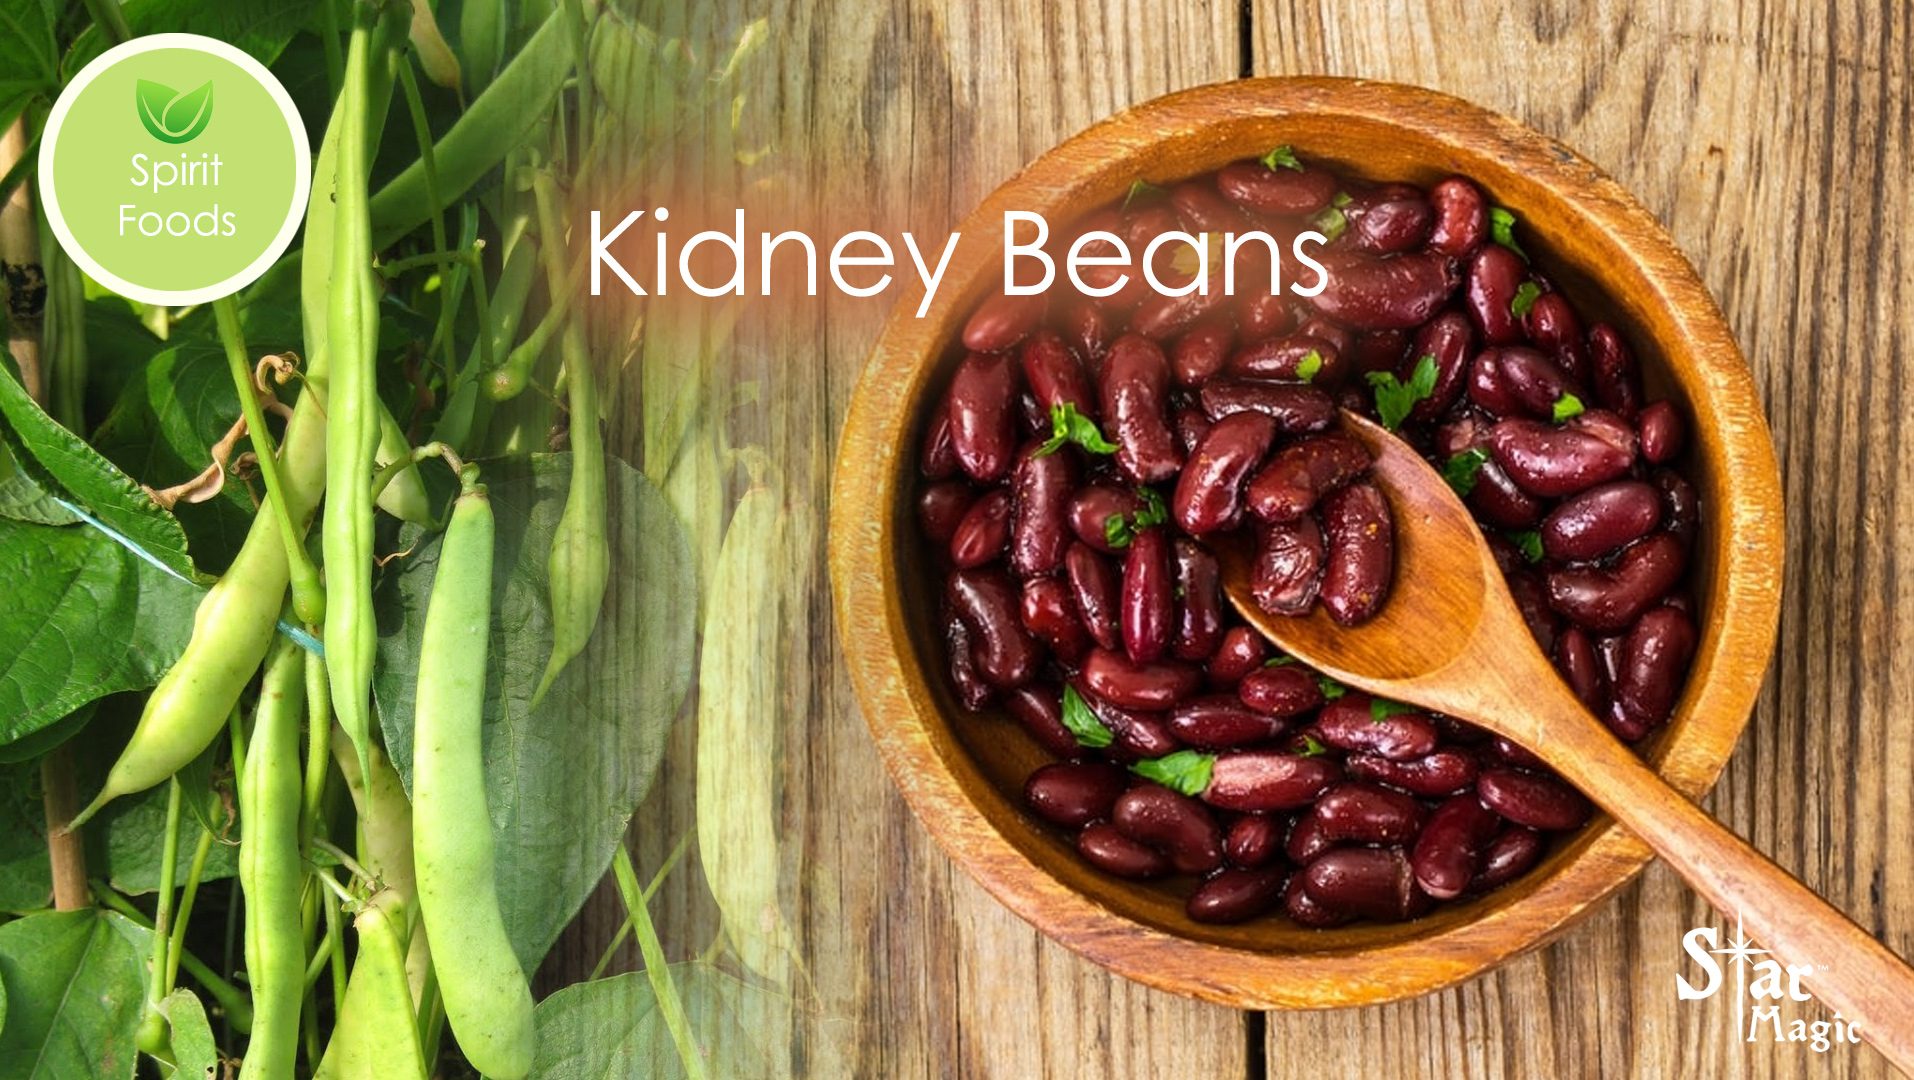 Spirit Food – Kidney Beans